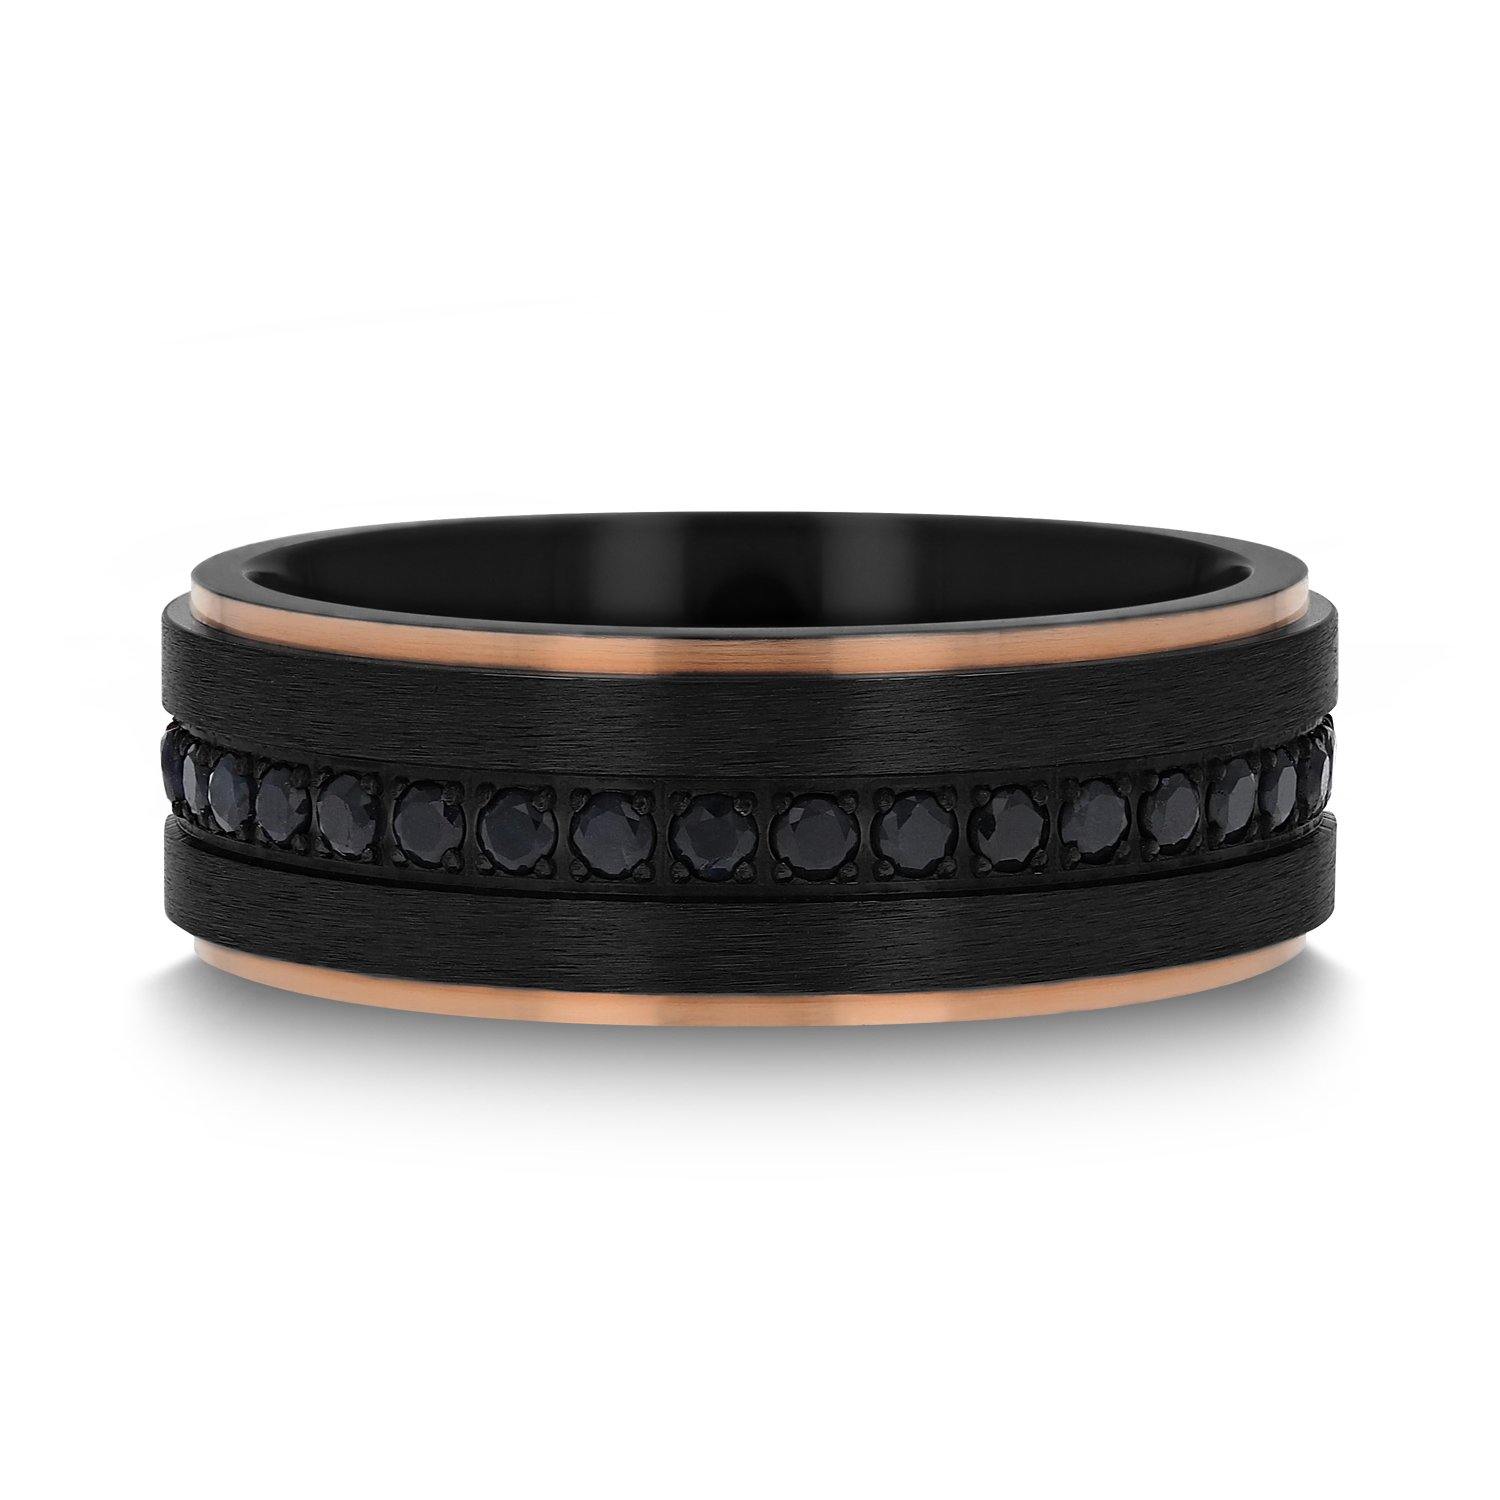 ASTRO - Black Titanium Ring with Rose Gold and Black Sapphires - The Rutile Ltd